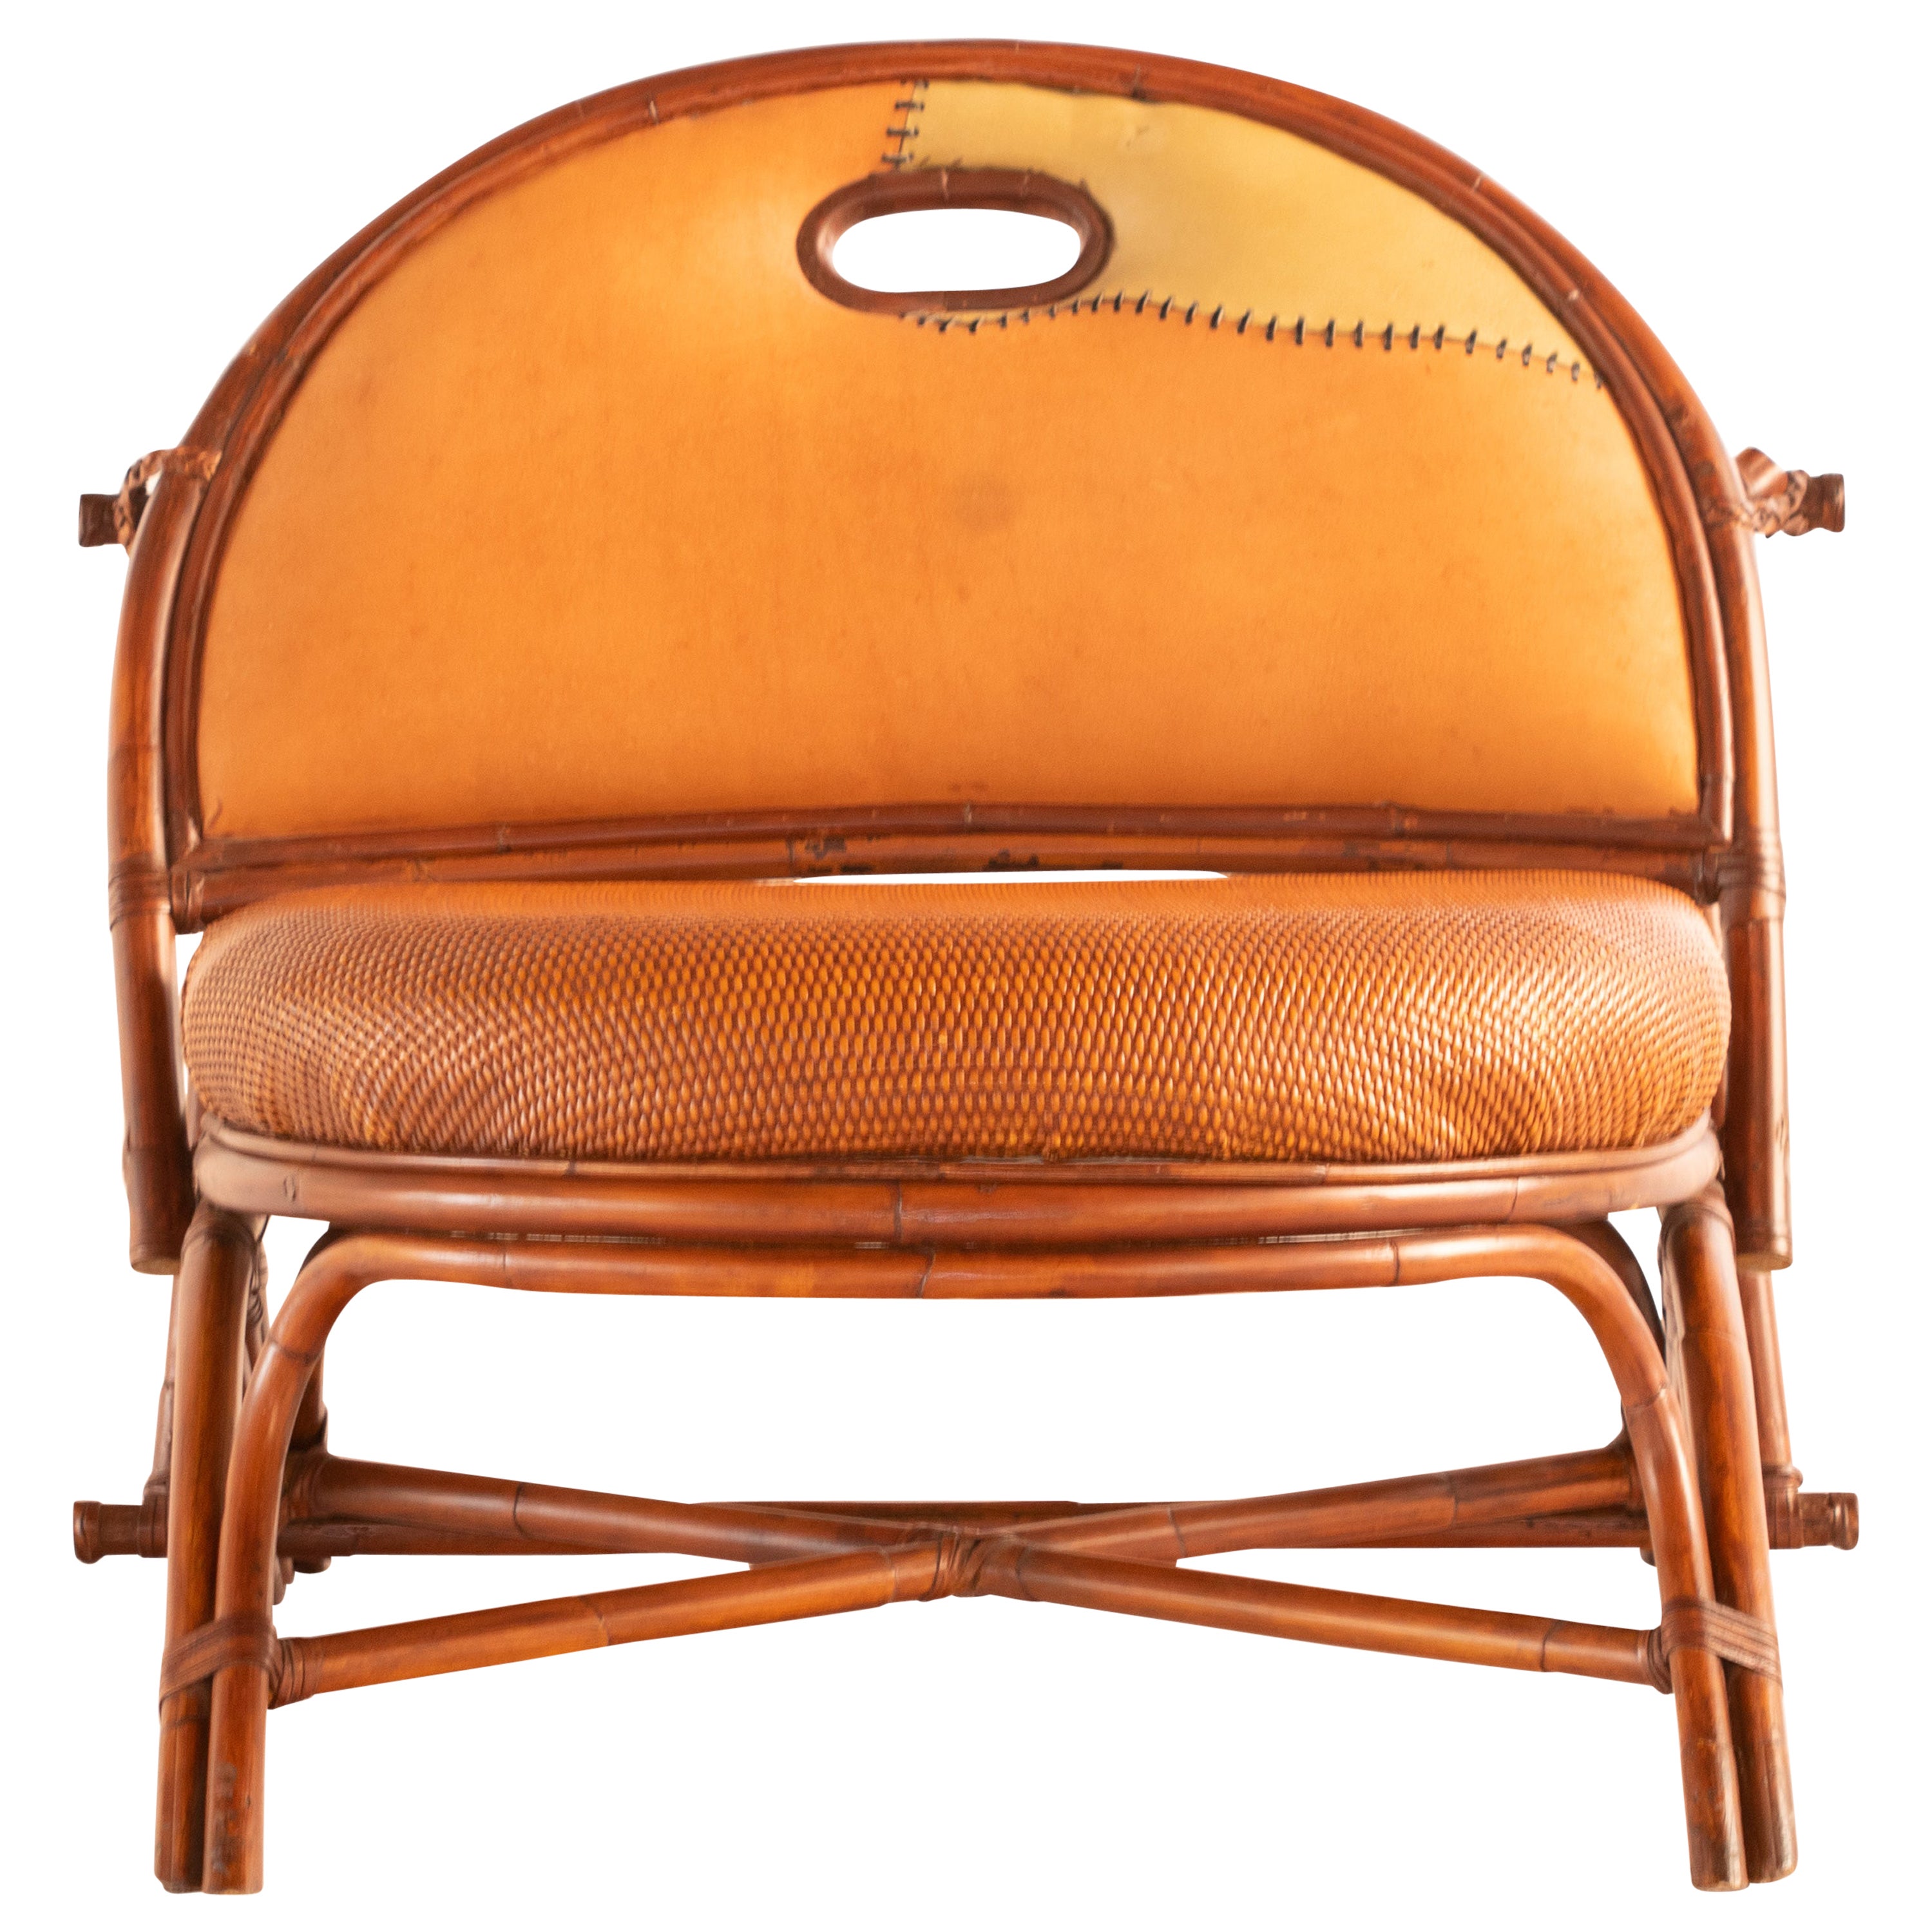 Rattan Chair Wood Cane Color Leather Patchwork Movable Backrest Kalma Furniture